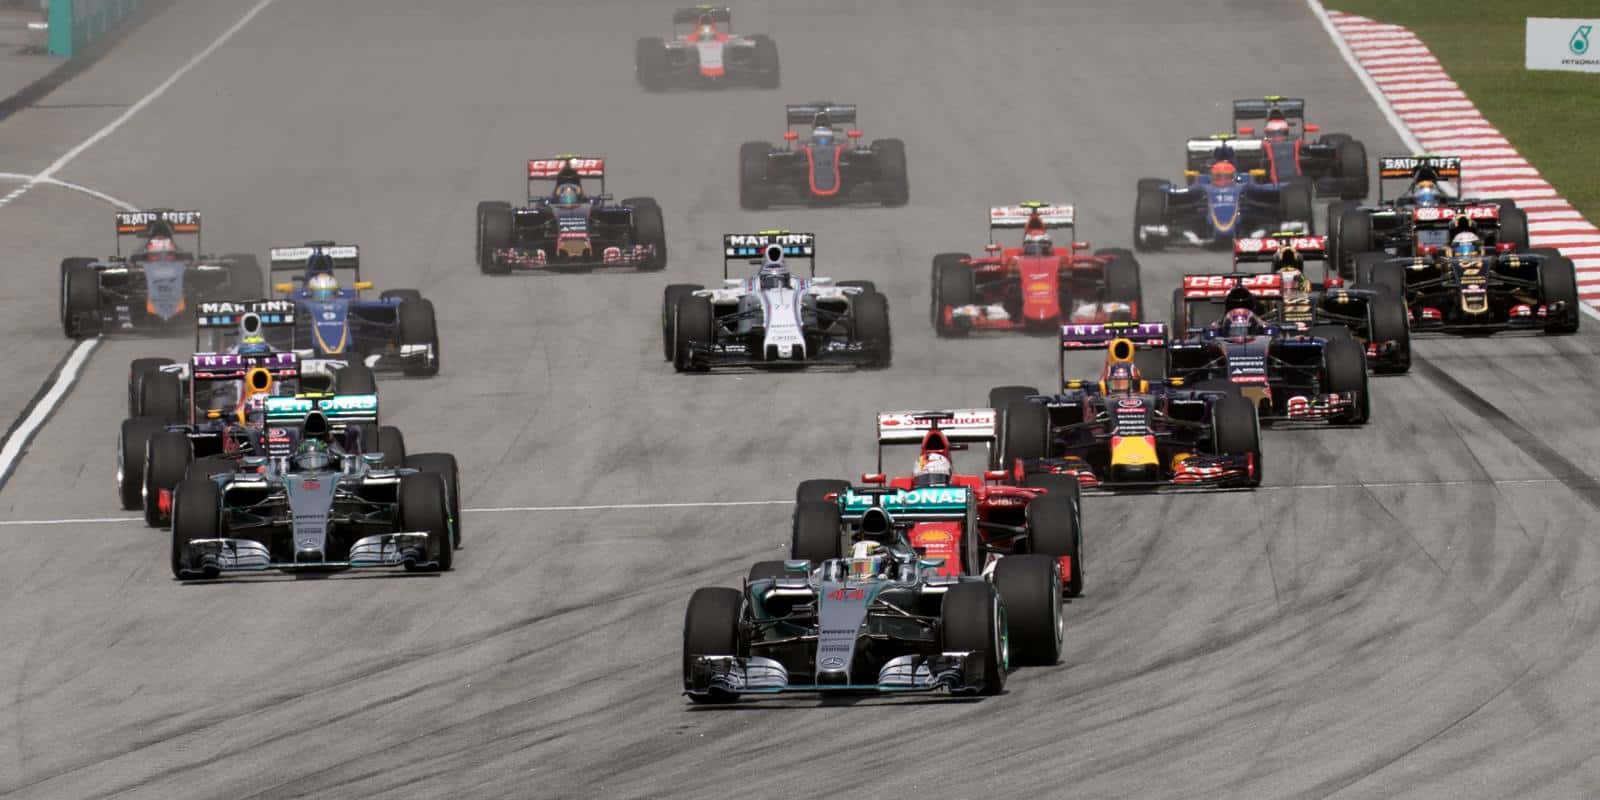 Formule 1 race